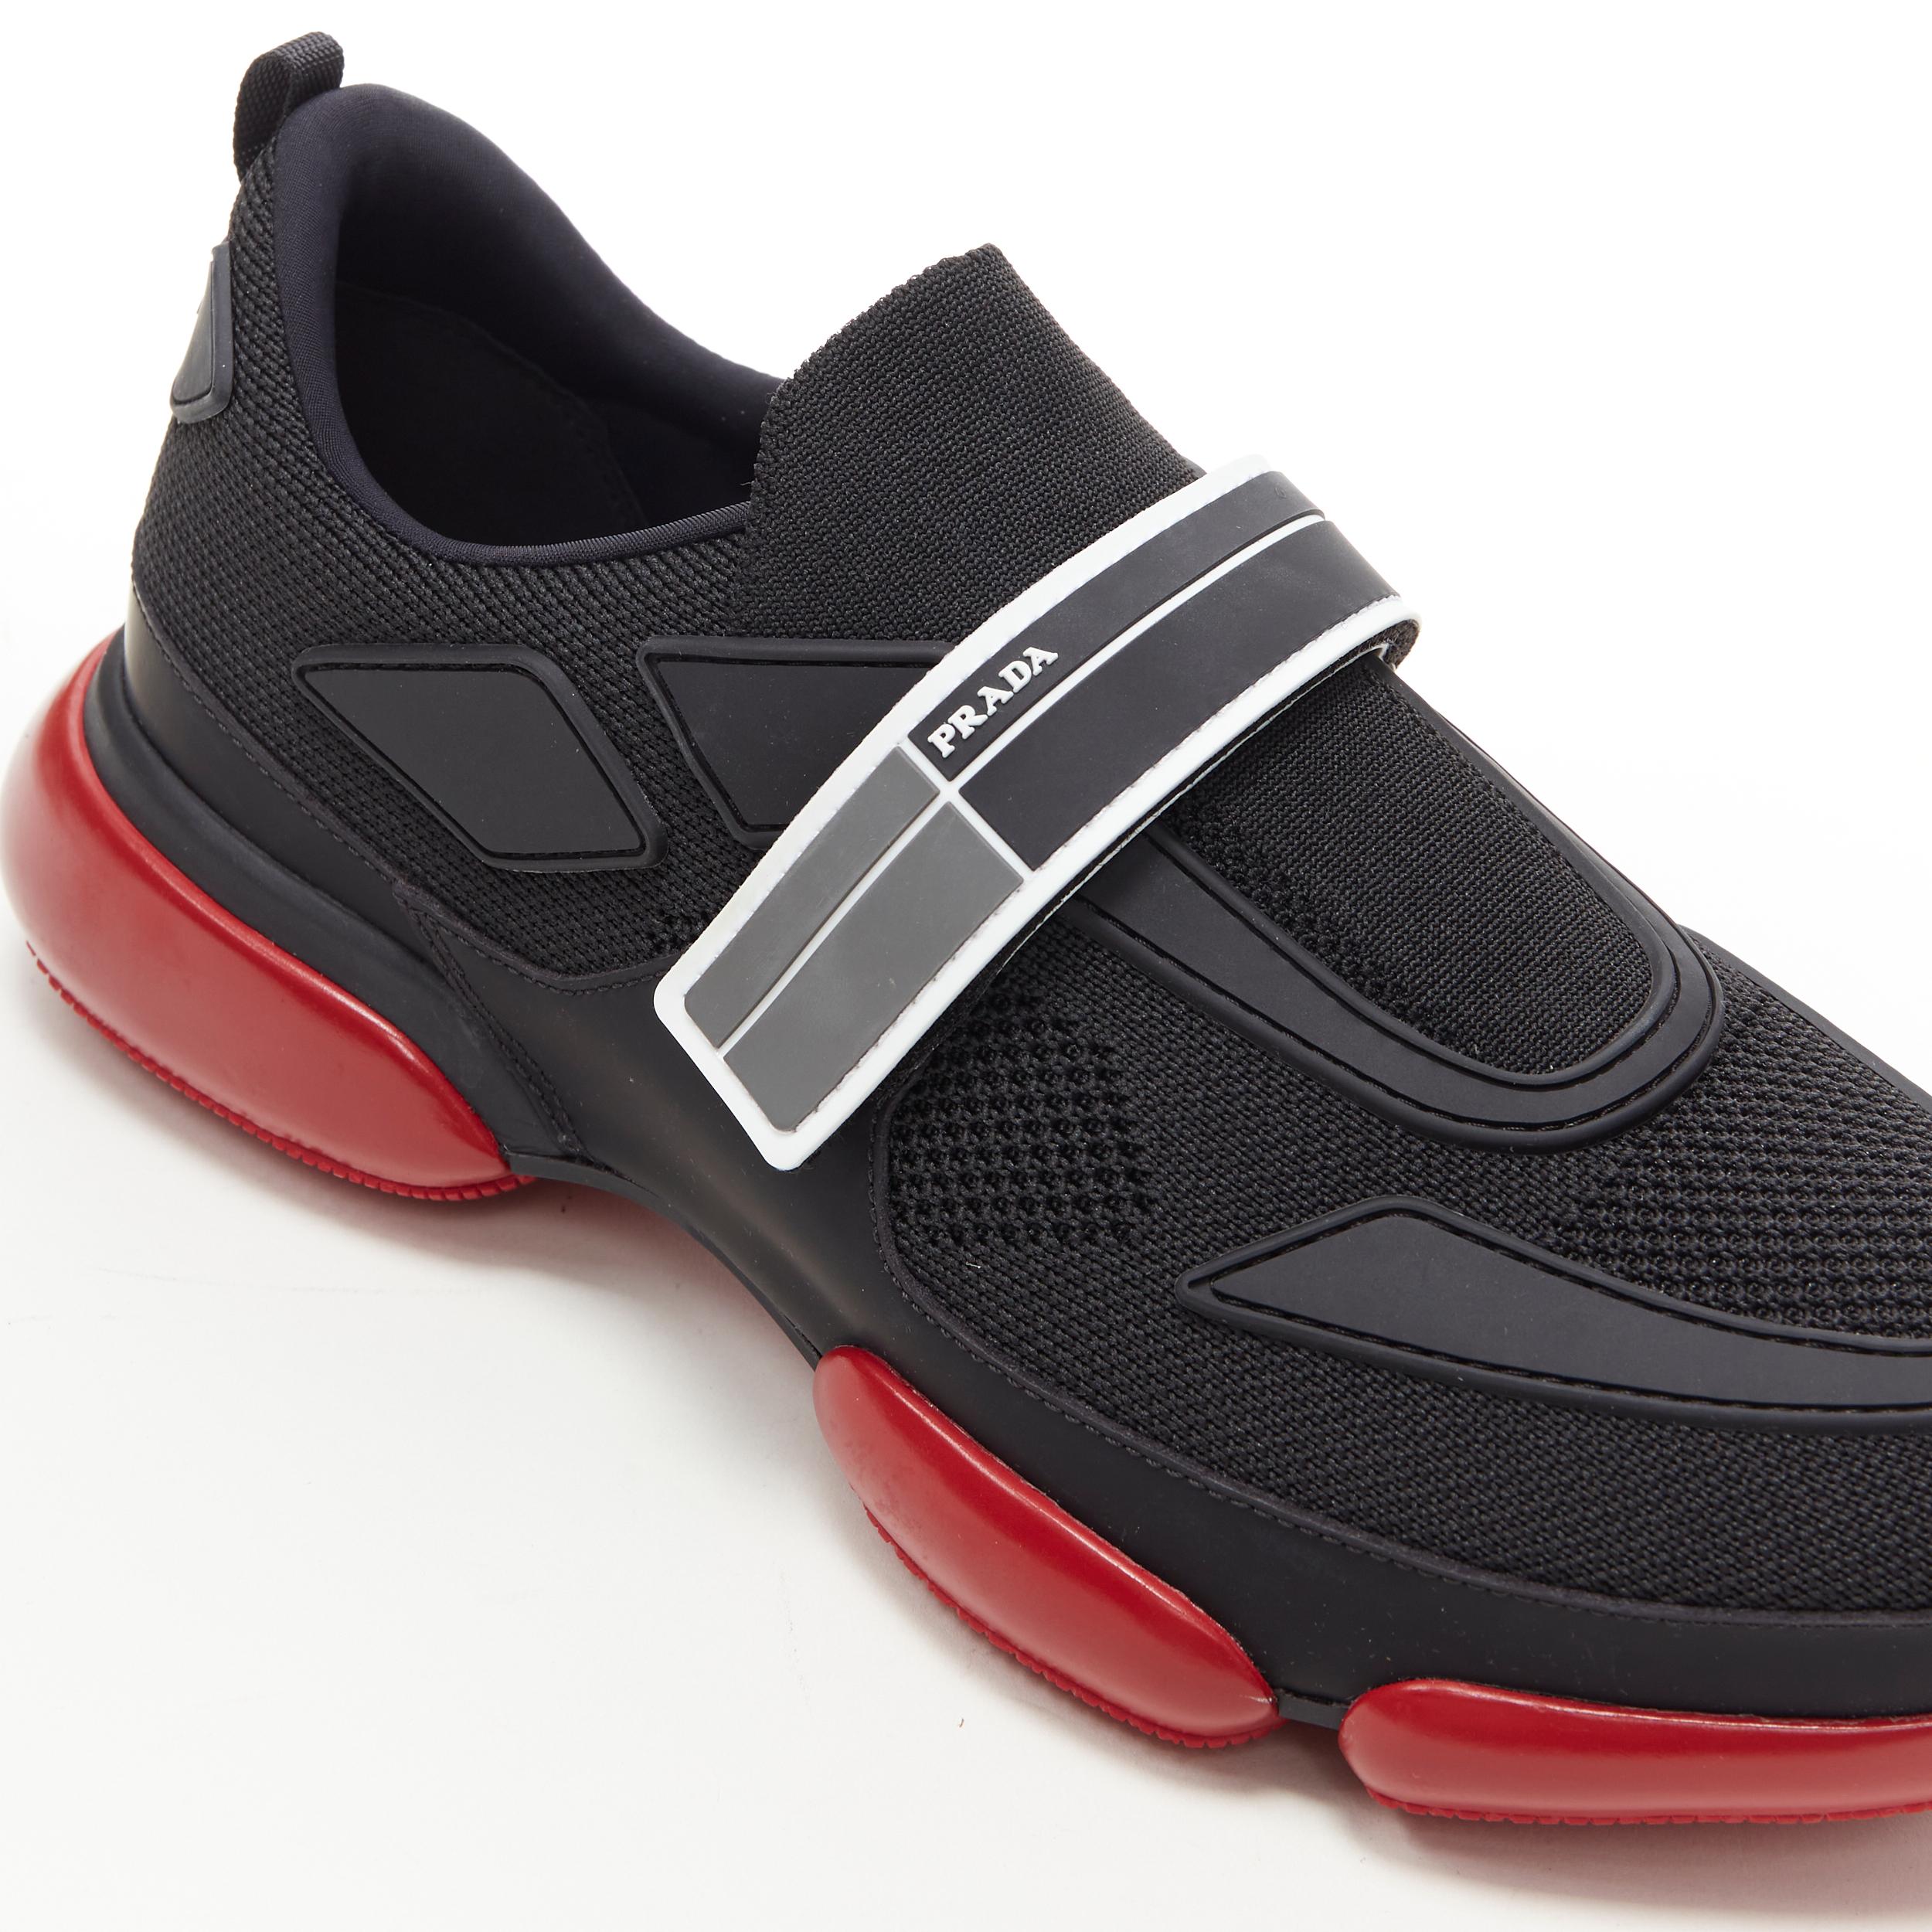 new PRADA Cloudbust black red logo rubber strapped low top sneakers UK7.5 EU41.5 1